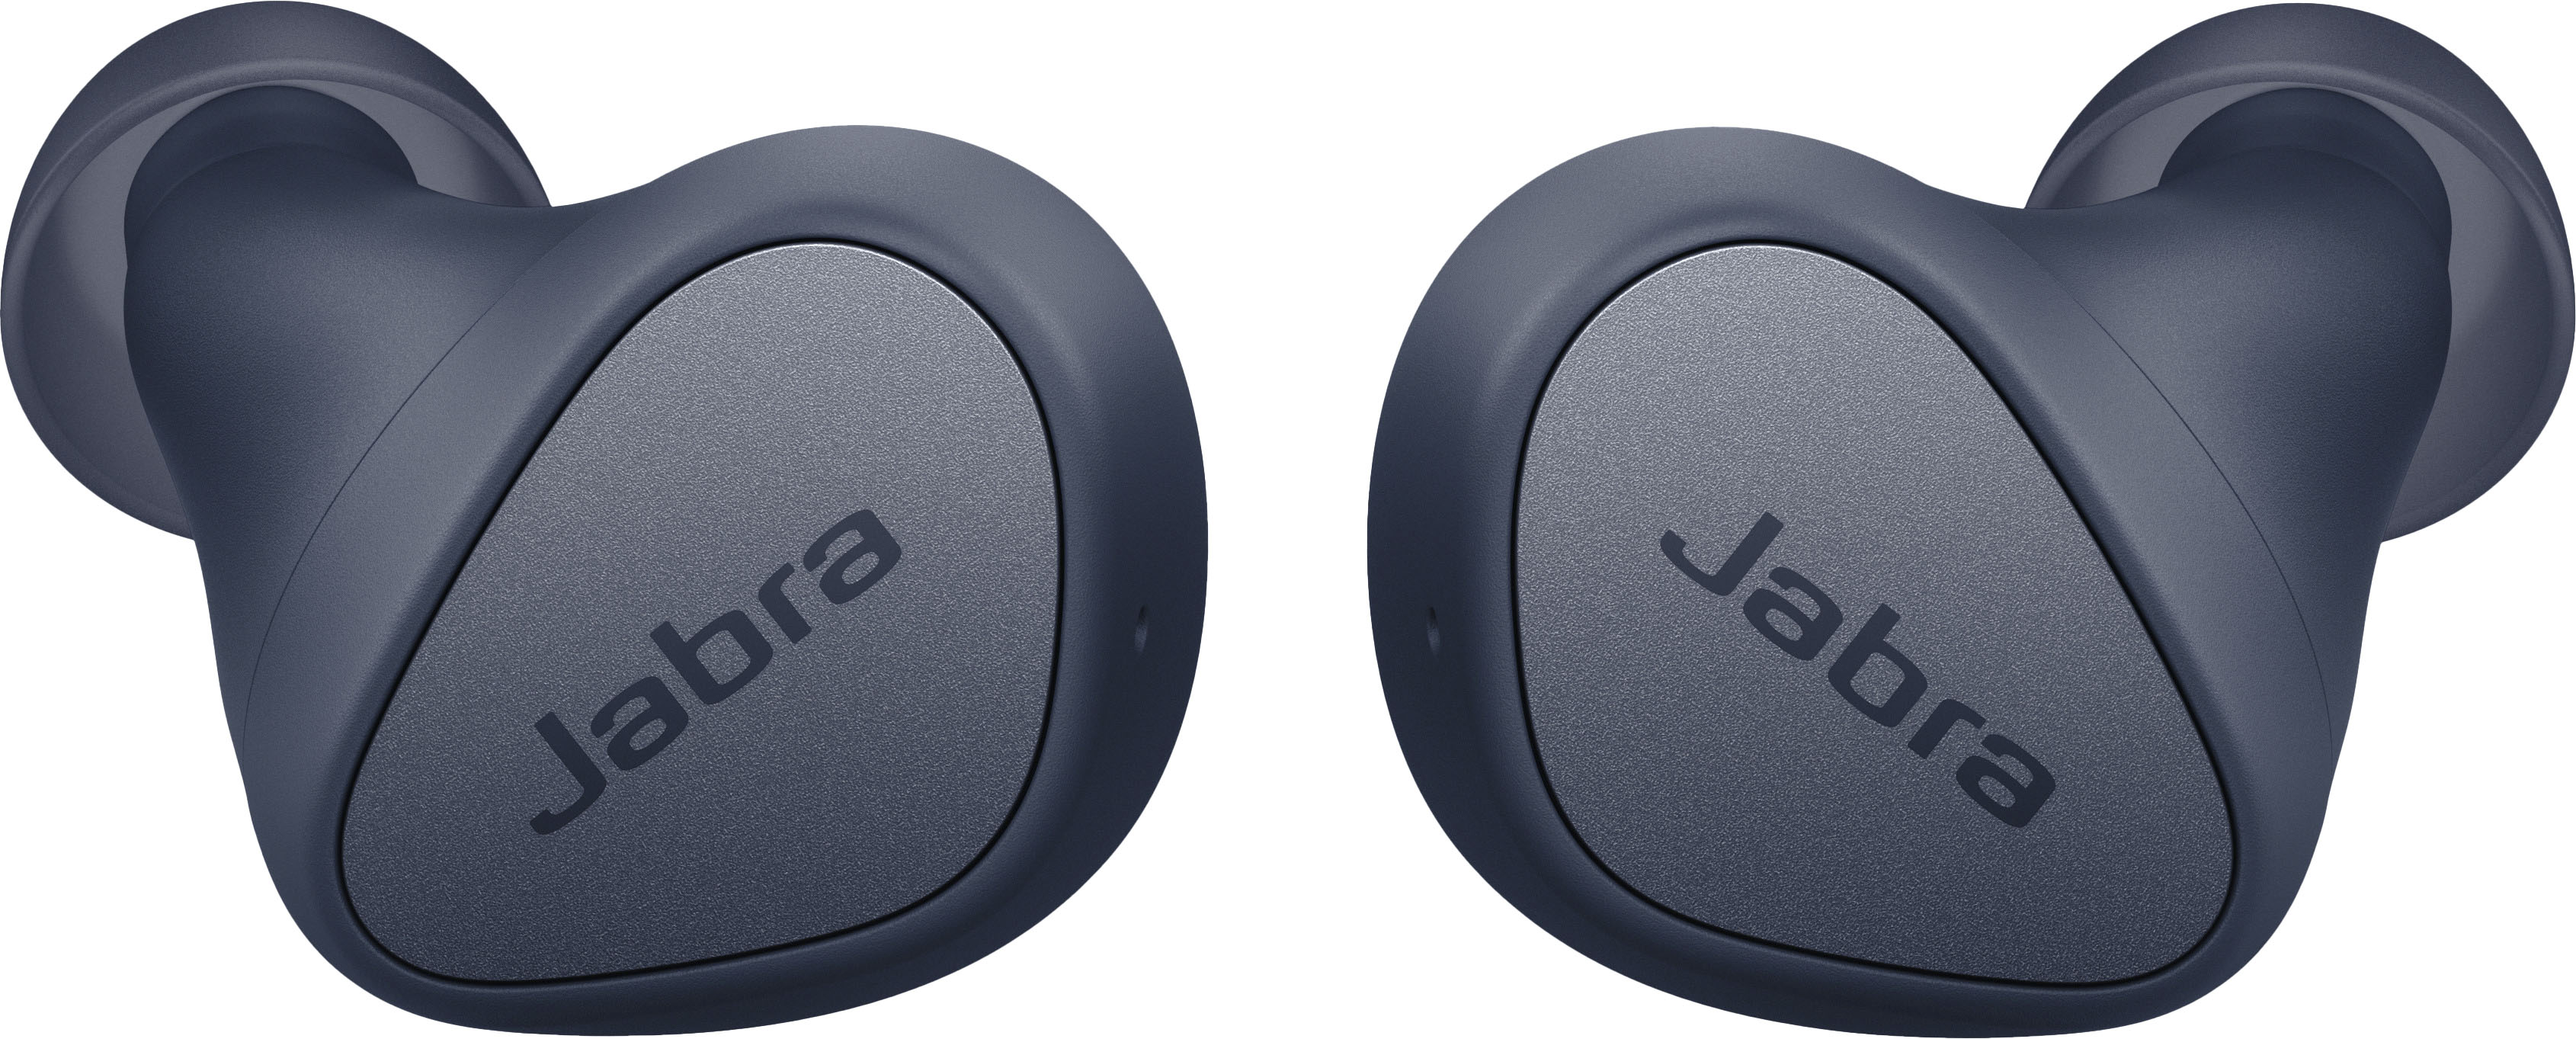 True 100-91410001-02 Jabra Navy In-Ear 3 Best Elite - Headphones Buy Wireless